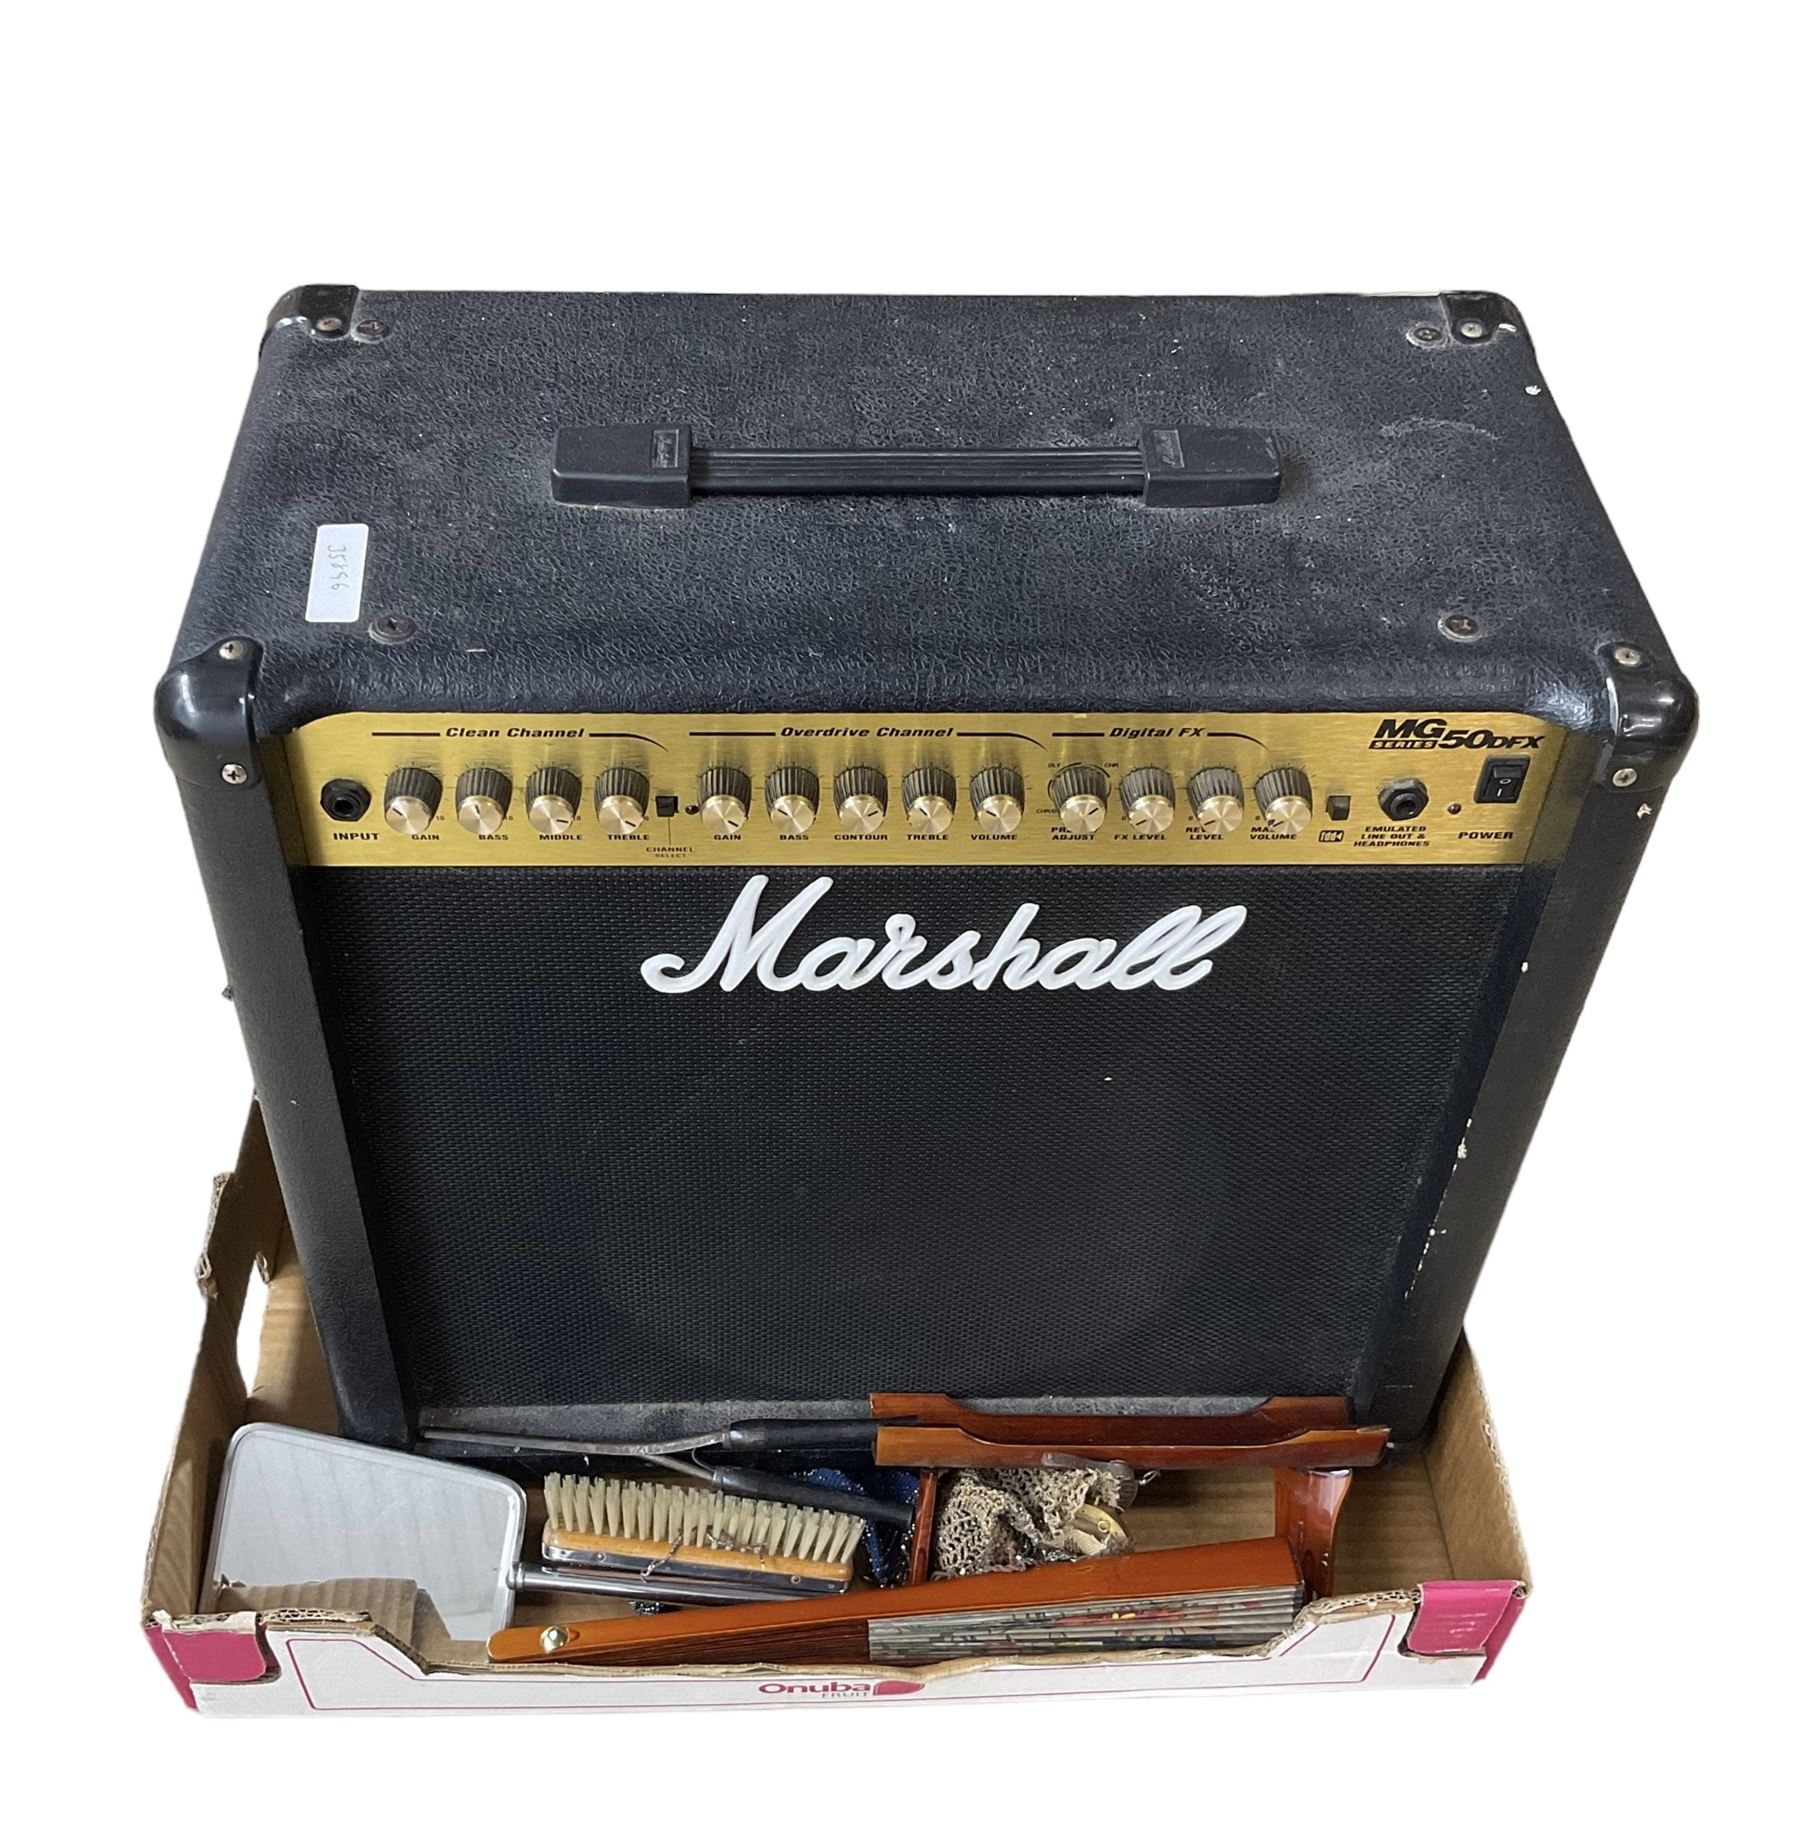 Marshall amplifier